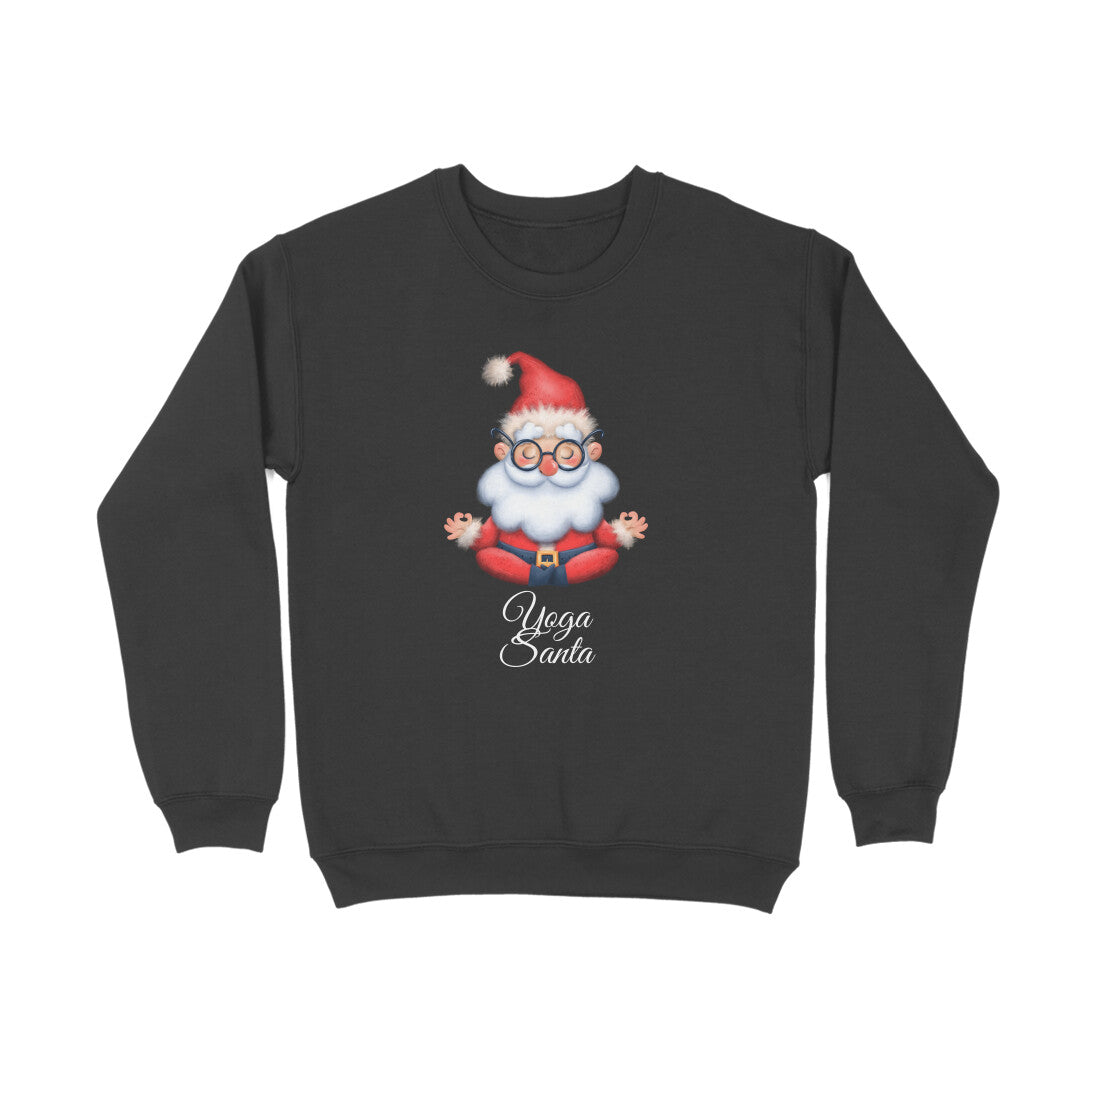 Yoga Santa - Unisex Black Sweatshirt